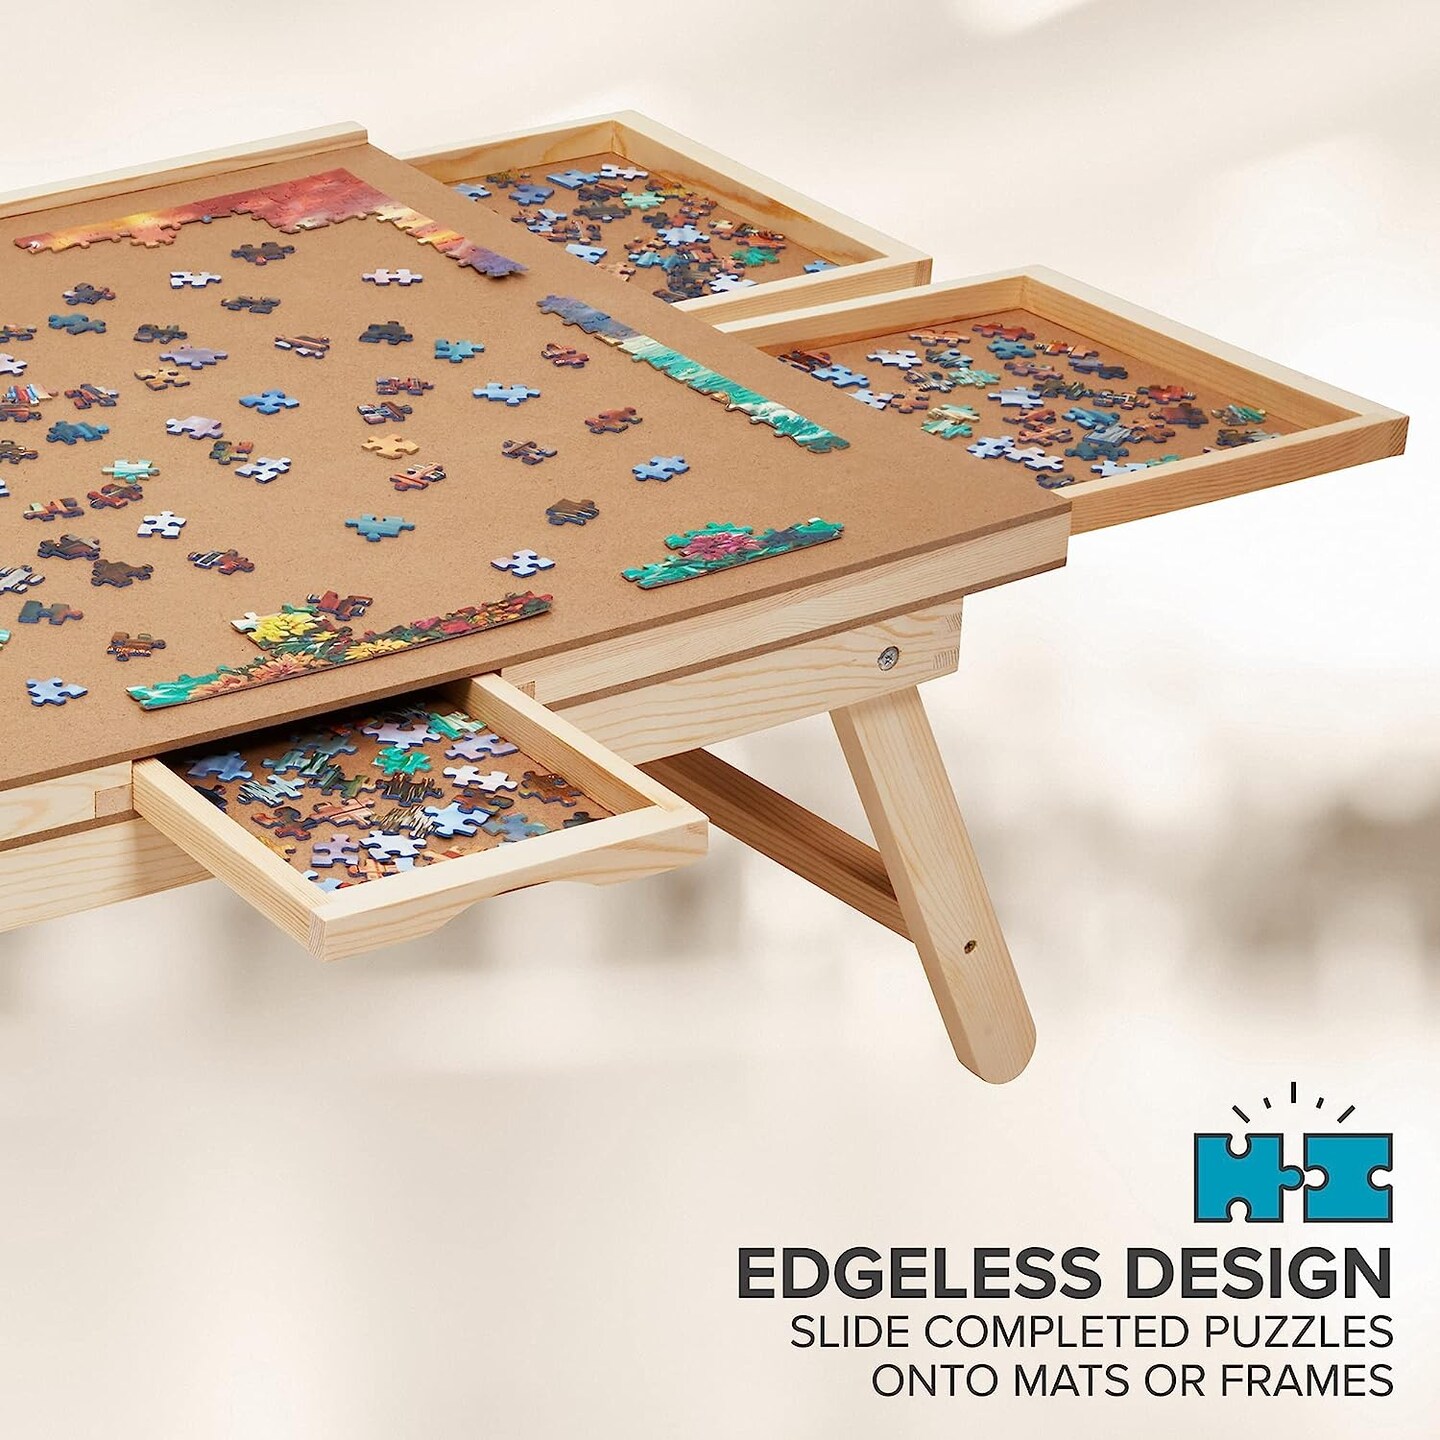 SkyMall 1000 Piece Puzzle Board &#x26; Mat, 23&#x201D; x 31&#x201D; Wooden Jigsaw Puzzle Table W/Legs